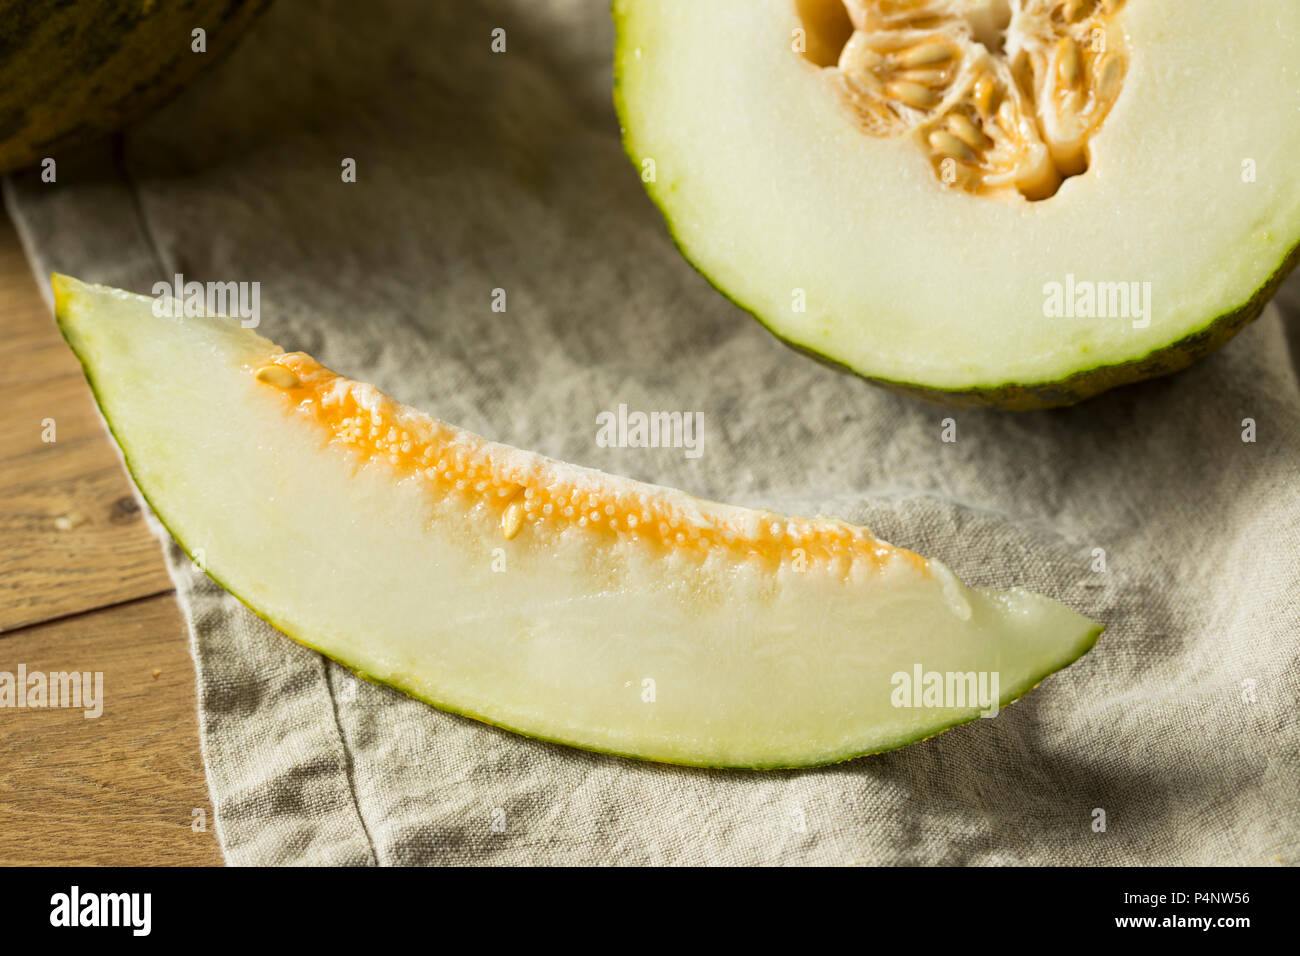 raw-green-organic-santa-claus-melon-ready-to-eat-stock-photo-alamy